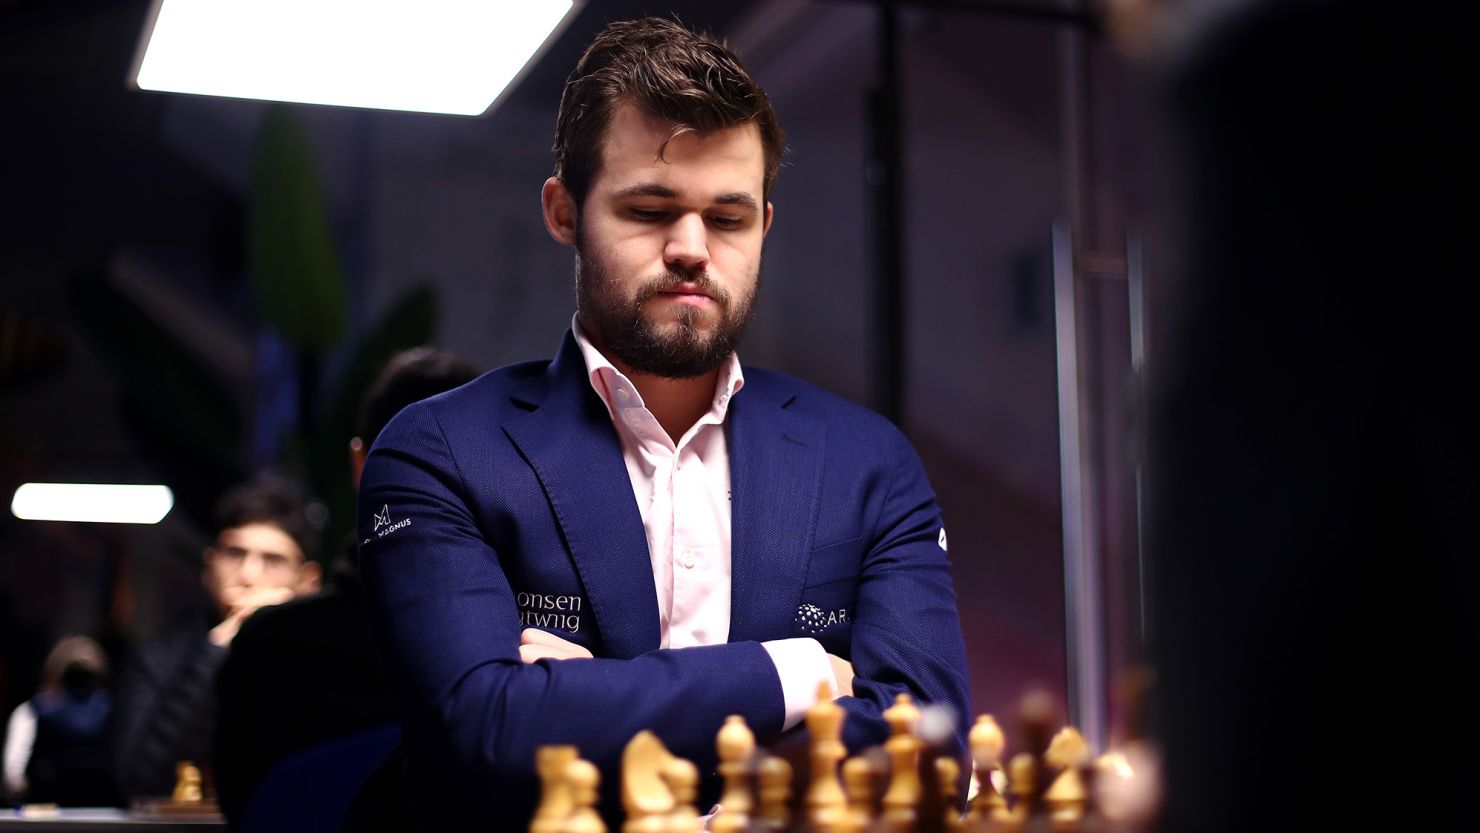 Chess Grandmaster Hans Niemann Had Cheated—Just Not Against Magnus